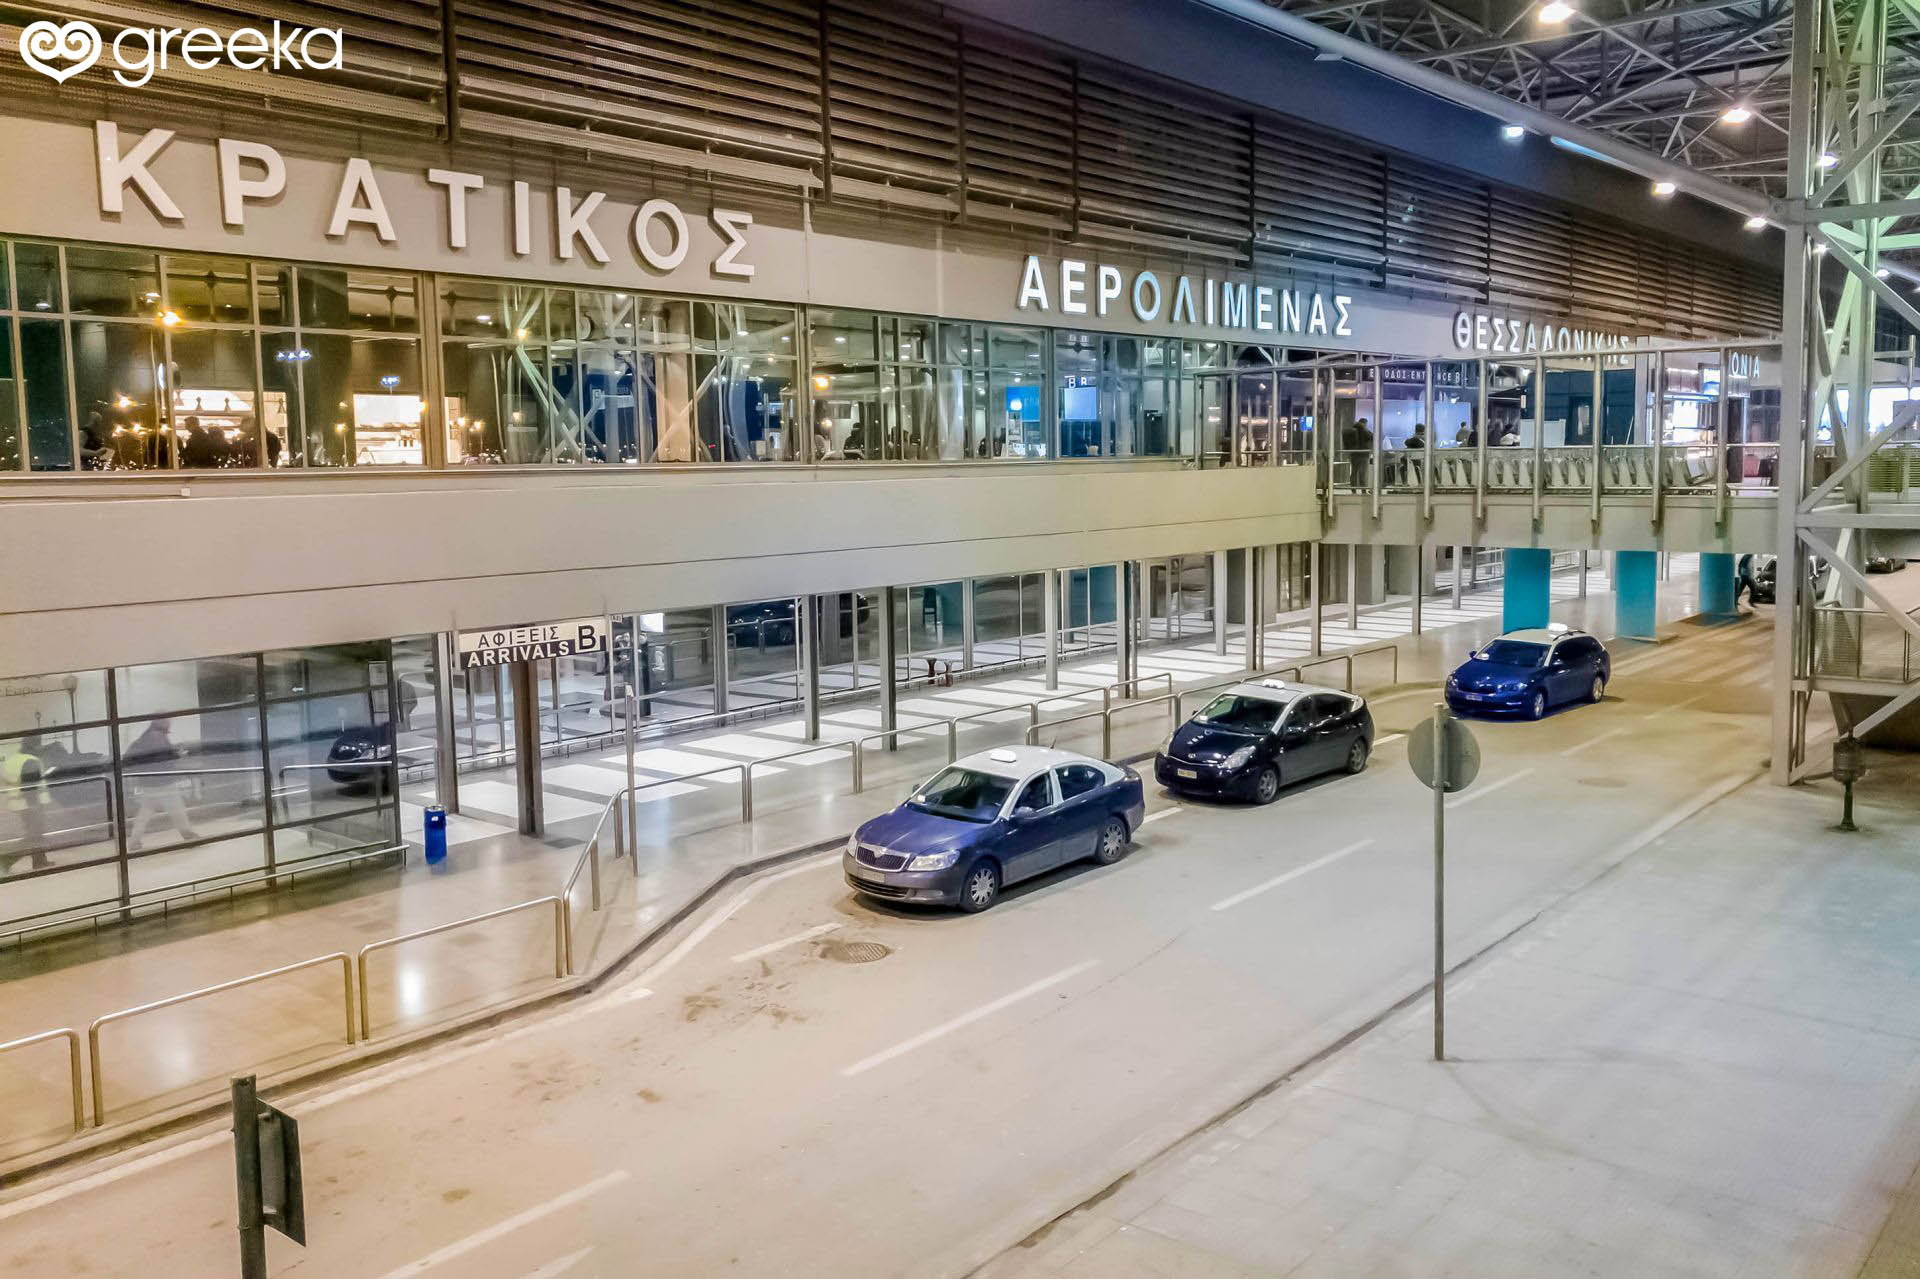 thessaloniki airport transfer